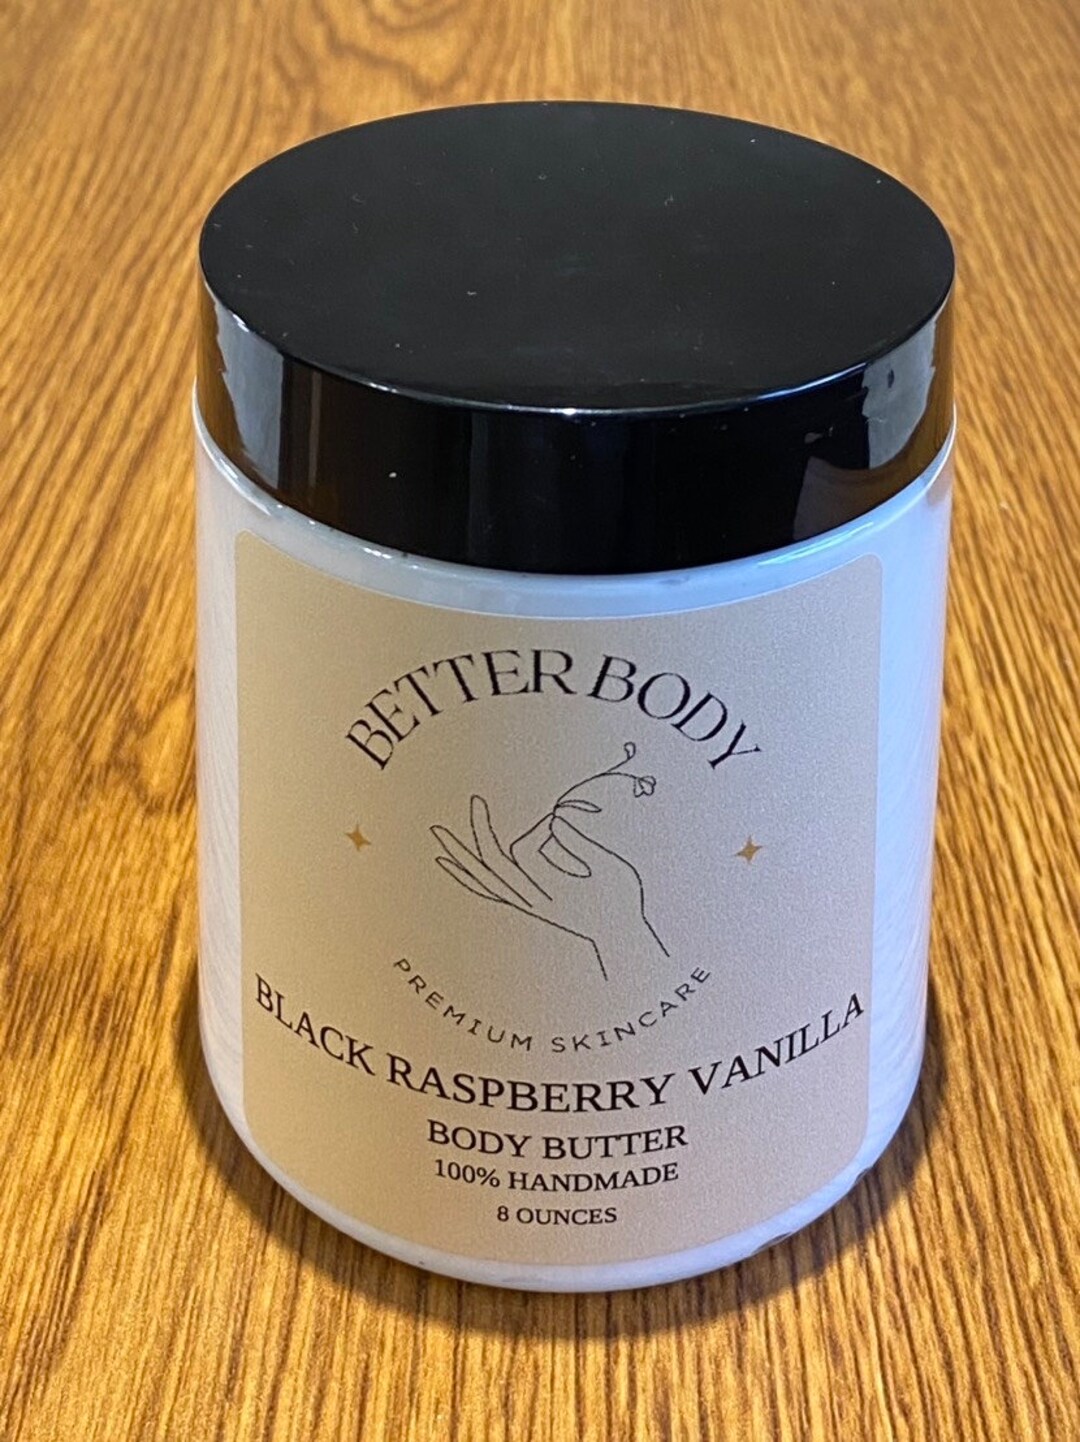 Black Raspberry Vanilla DIY Body Butter Kit